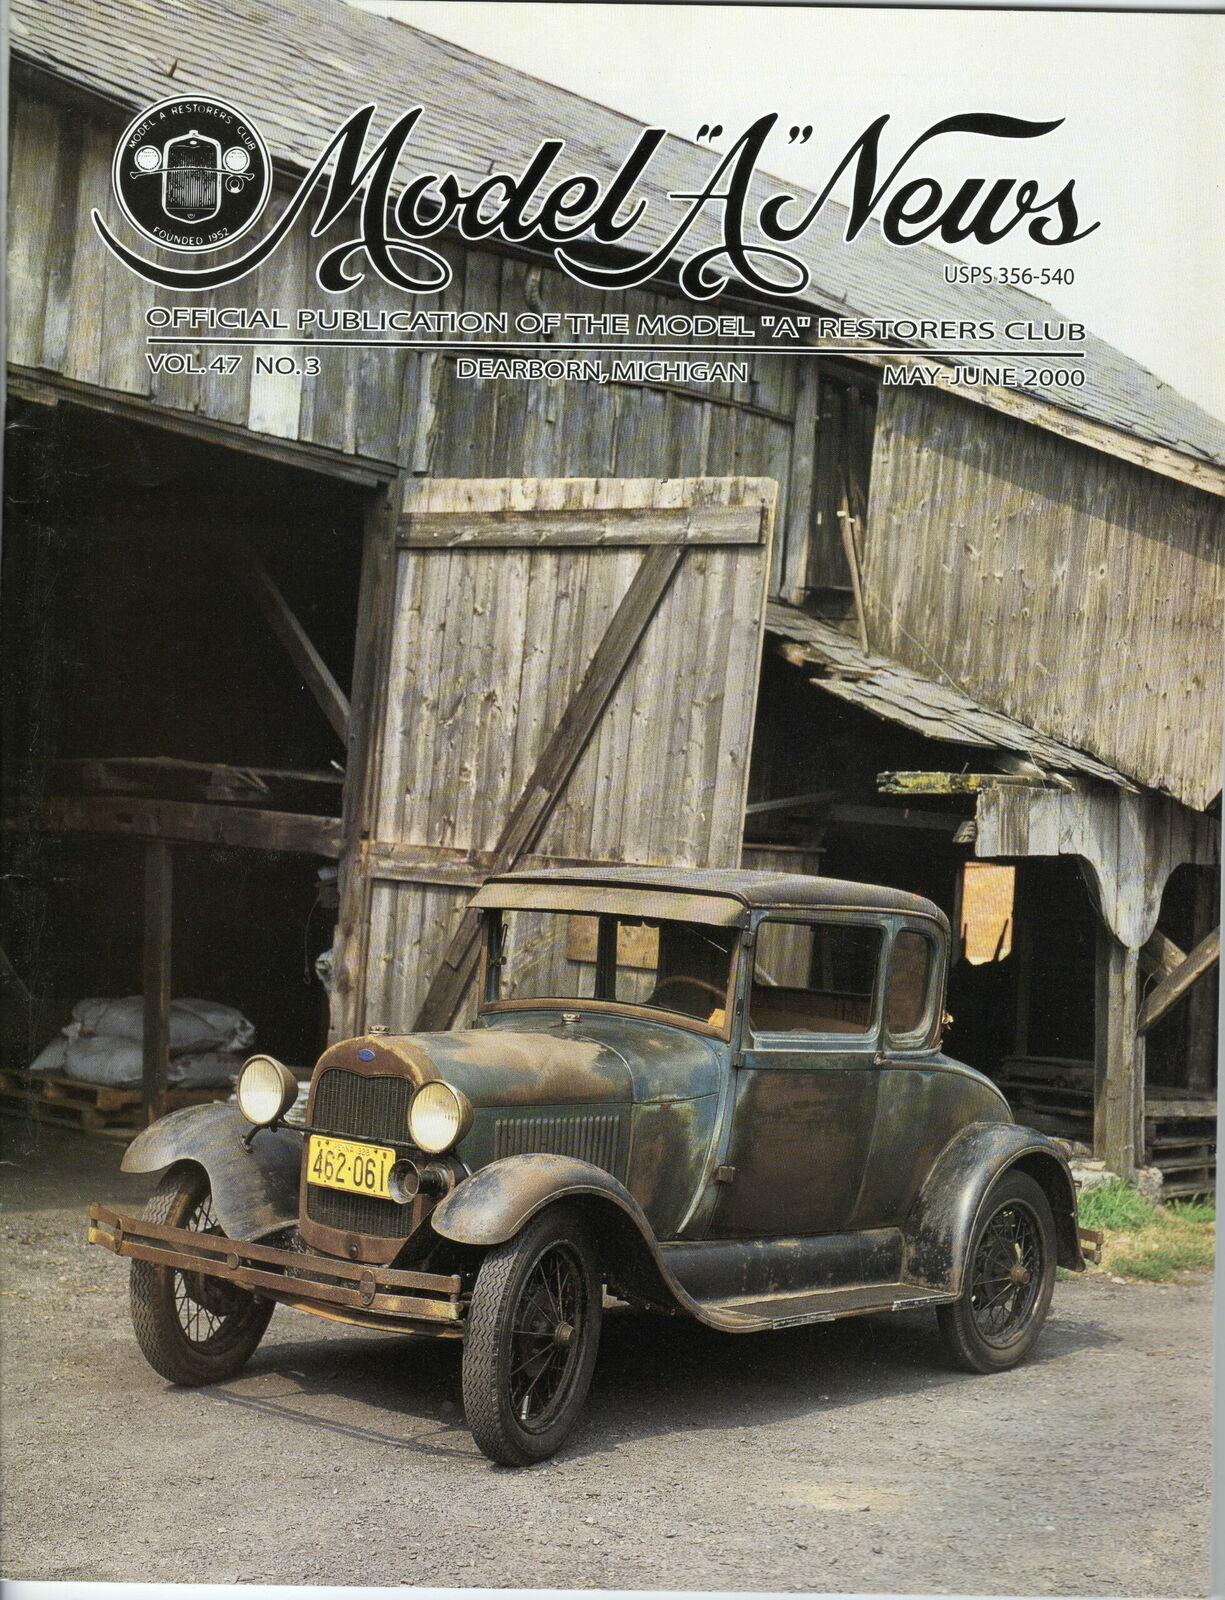 1928 Special Coupe - Model “A” News Official Publication Vol. 47 NO.3 2000